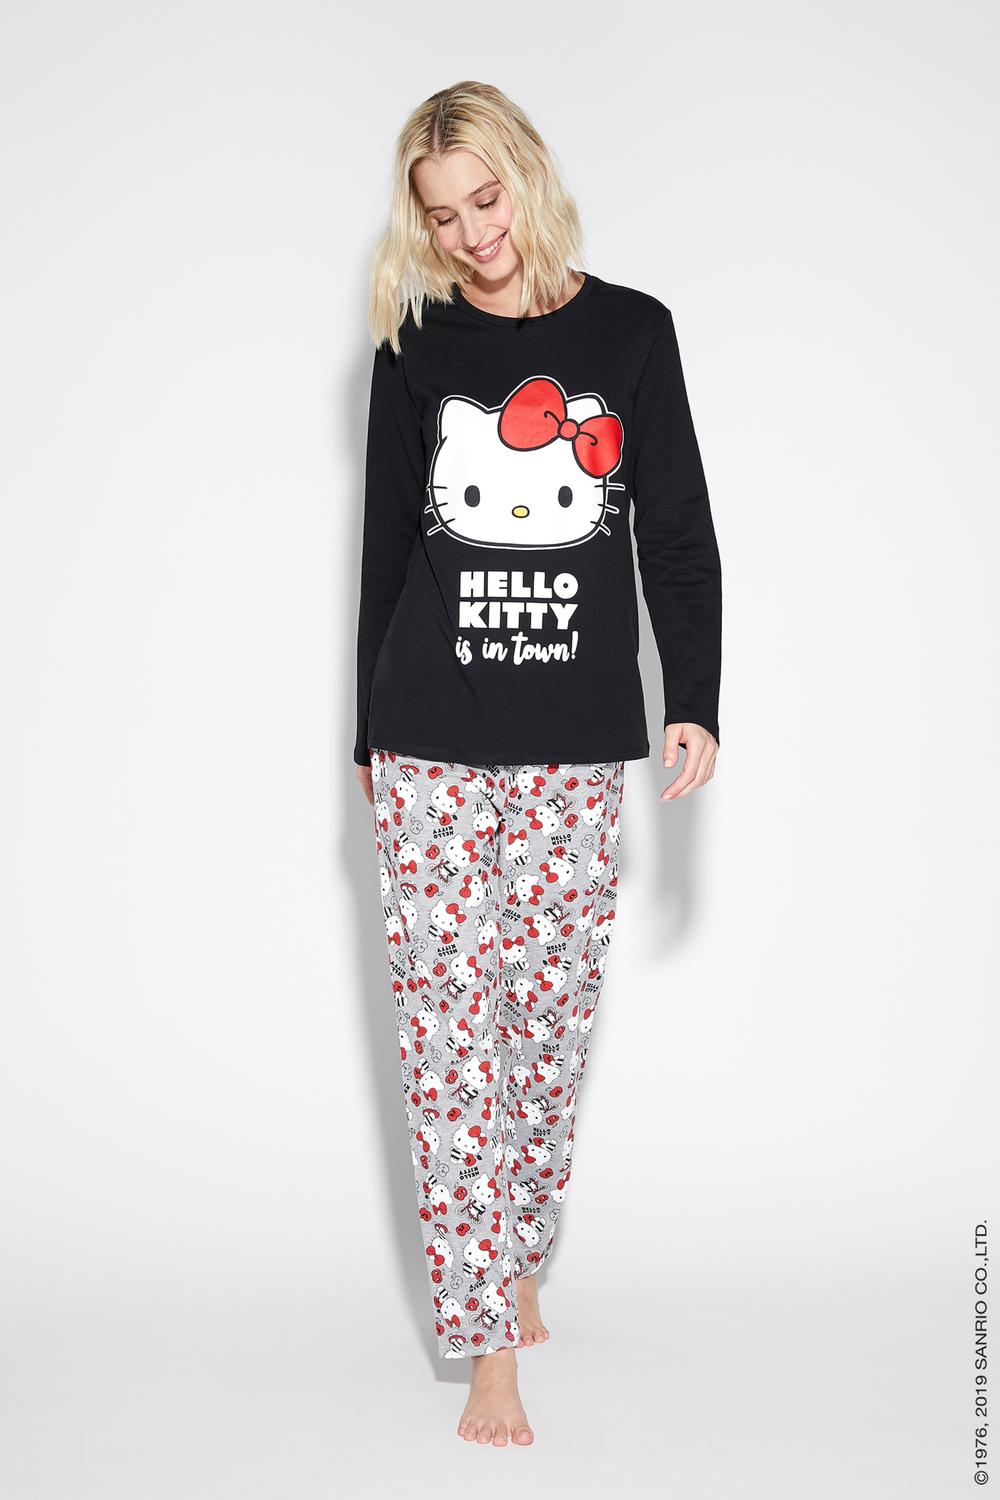 Пижама hello. Хелло Китти пижама со штанами. Пижамные штаны с Хеллоу Китти. Пижама Хелло Китти женская. Hello Kitty hello Kitty пижамы.